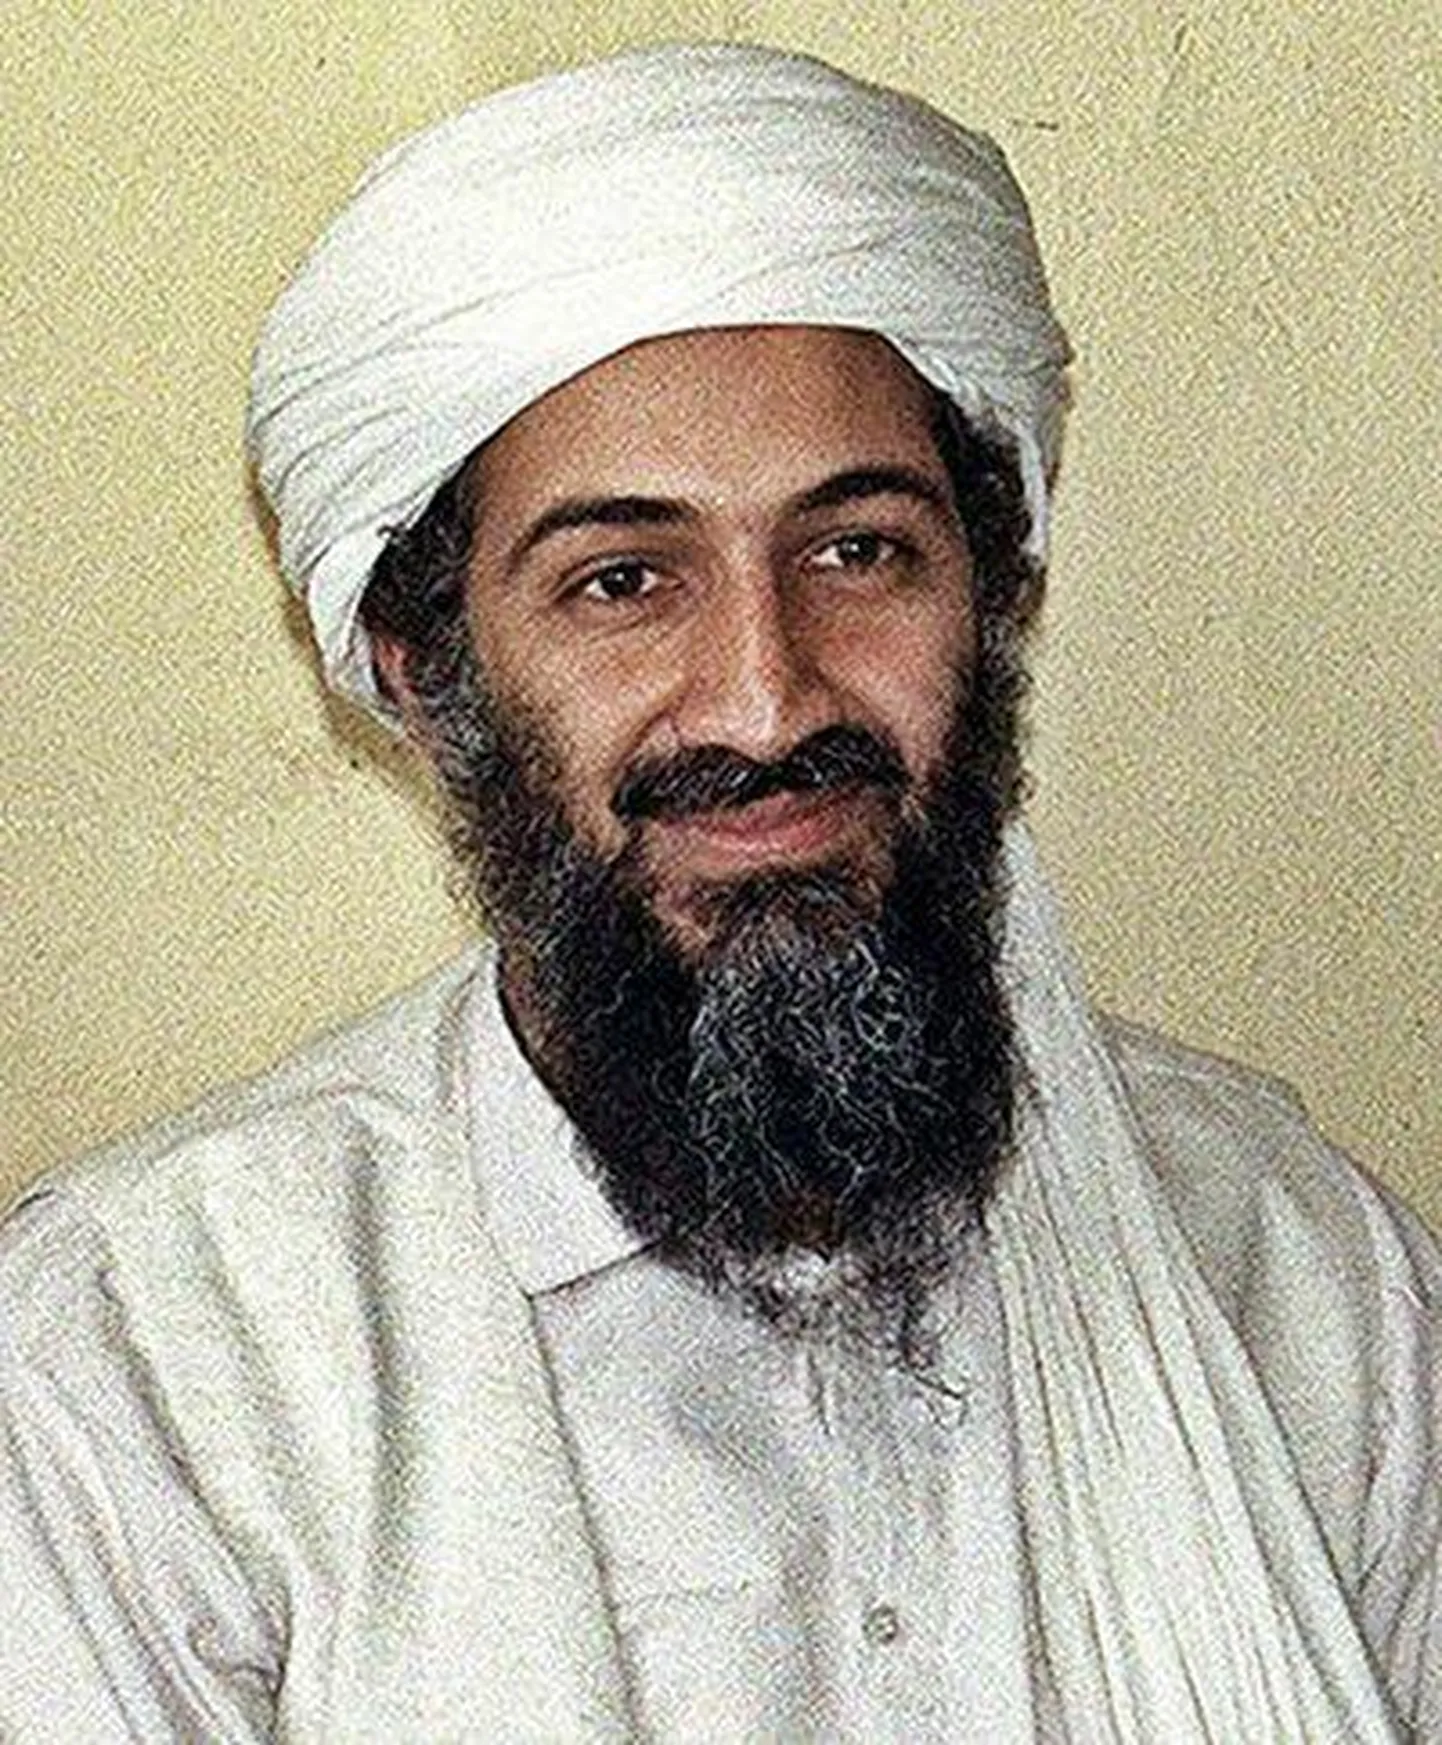 Terrorirühmituse Al-Qaeda endine juht Osama bin Laden.